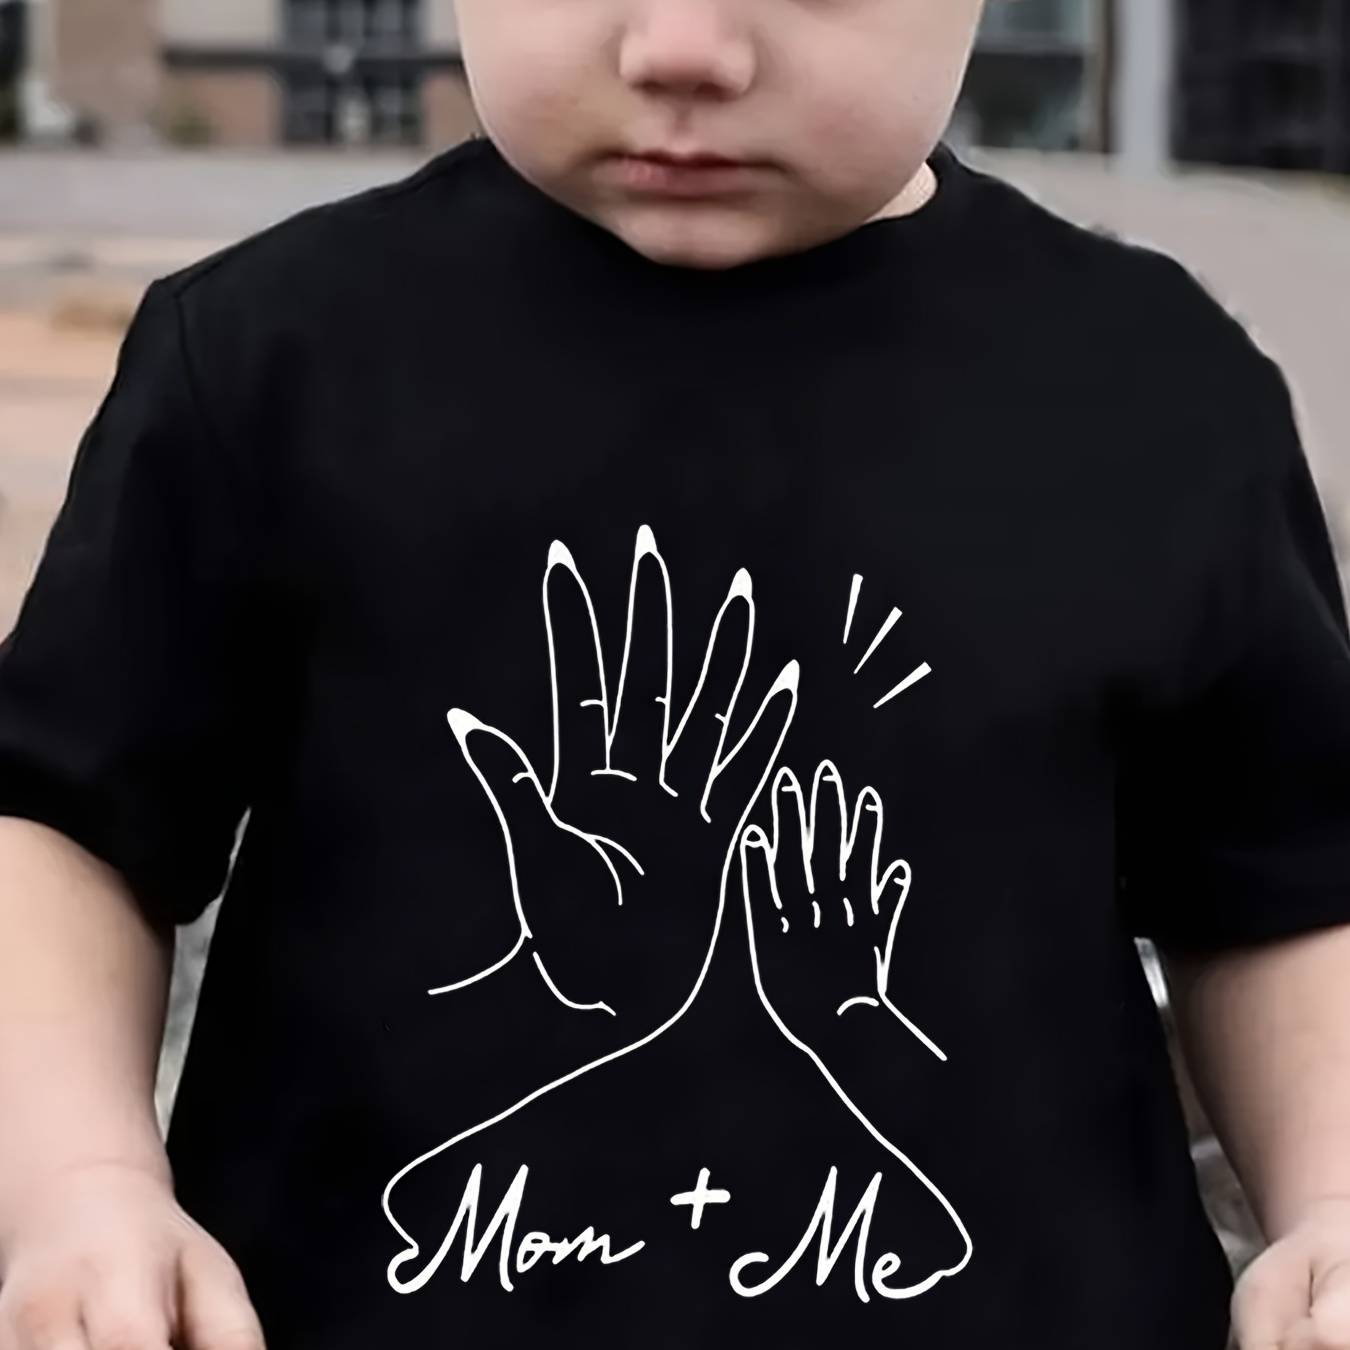 

Mom+ Me Print Tee Tops, Boy's Round Neck Casual Short Sleeve Comfortable Soft Versatile T-shirt